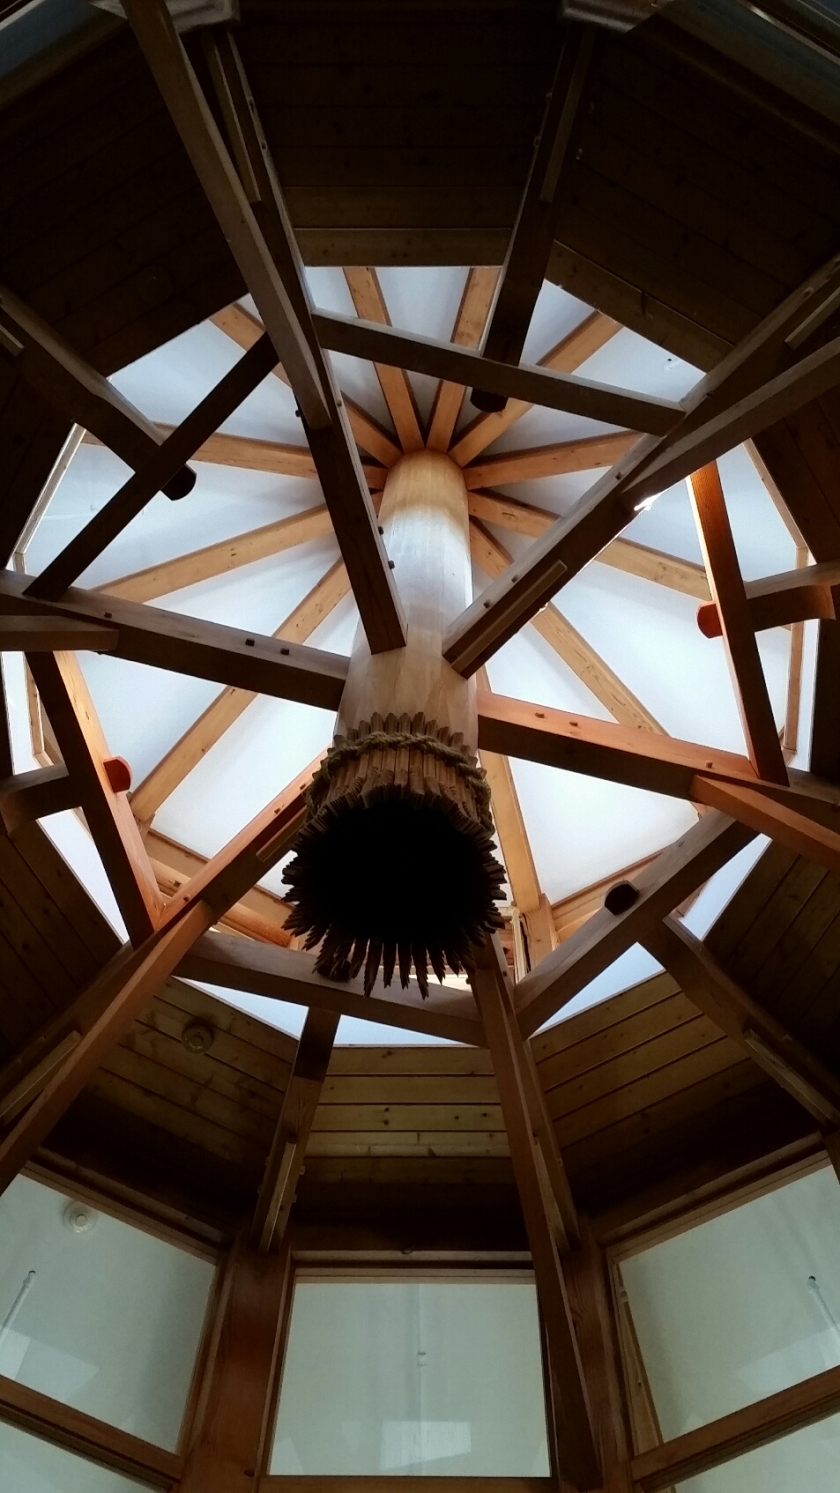 Wooden beams in a hexagonal ceiling